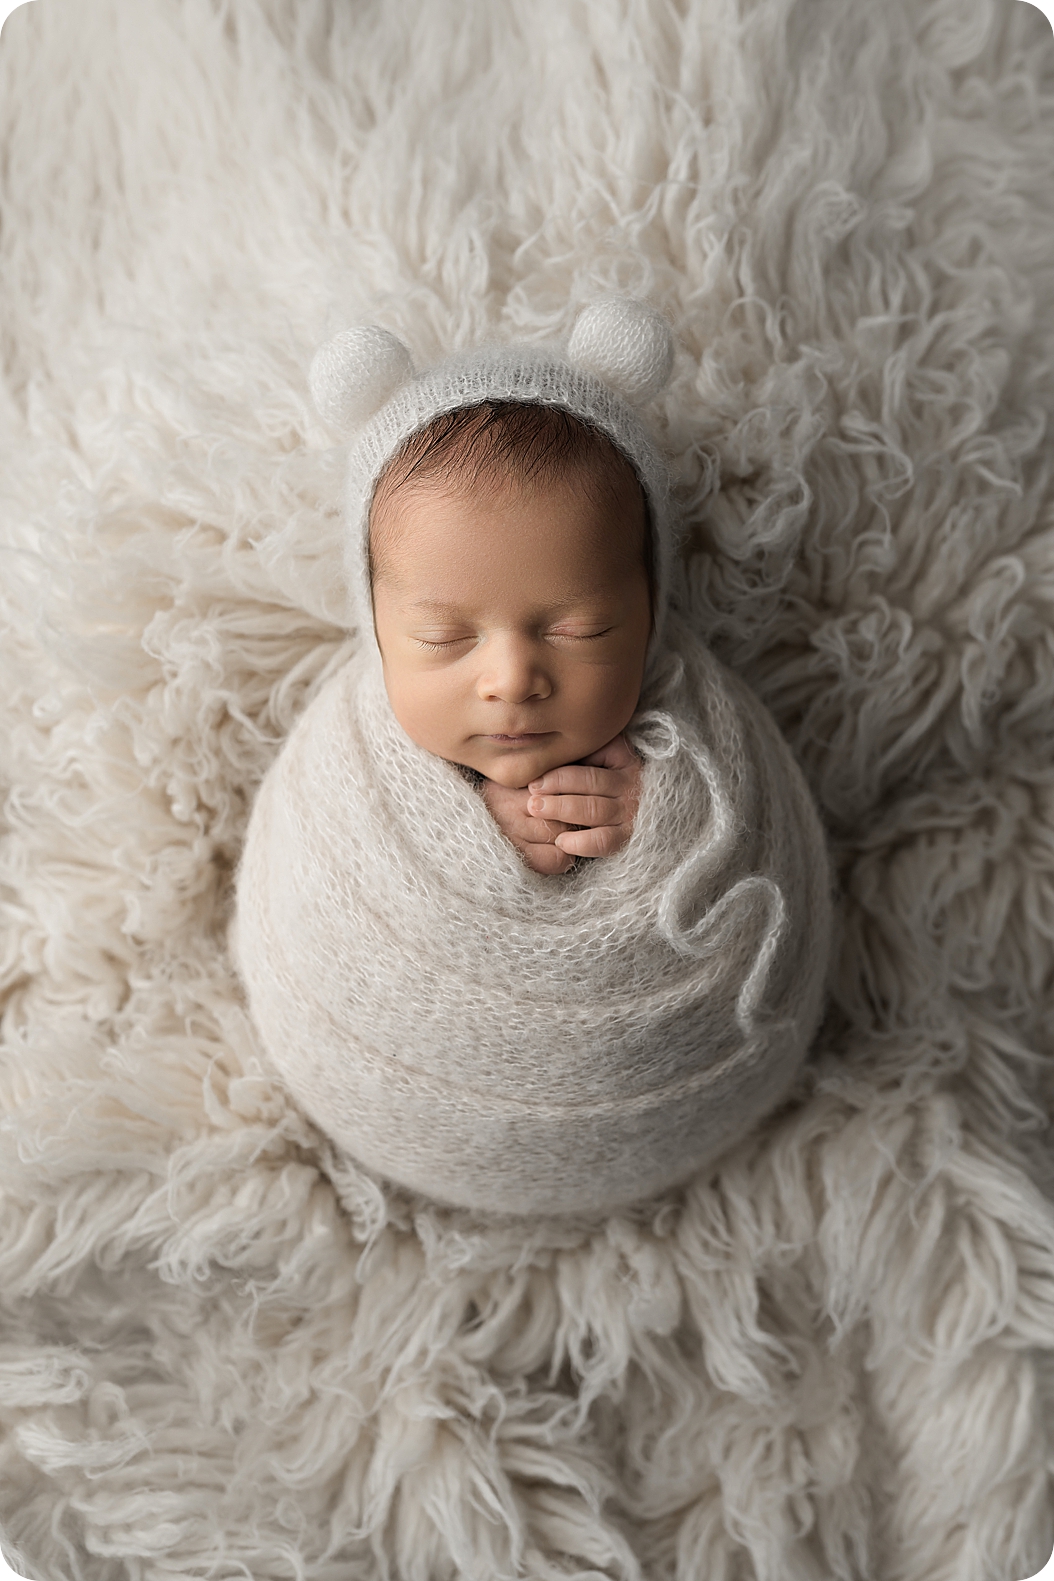 baby sleeps during newborn photos in Utah studio